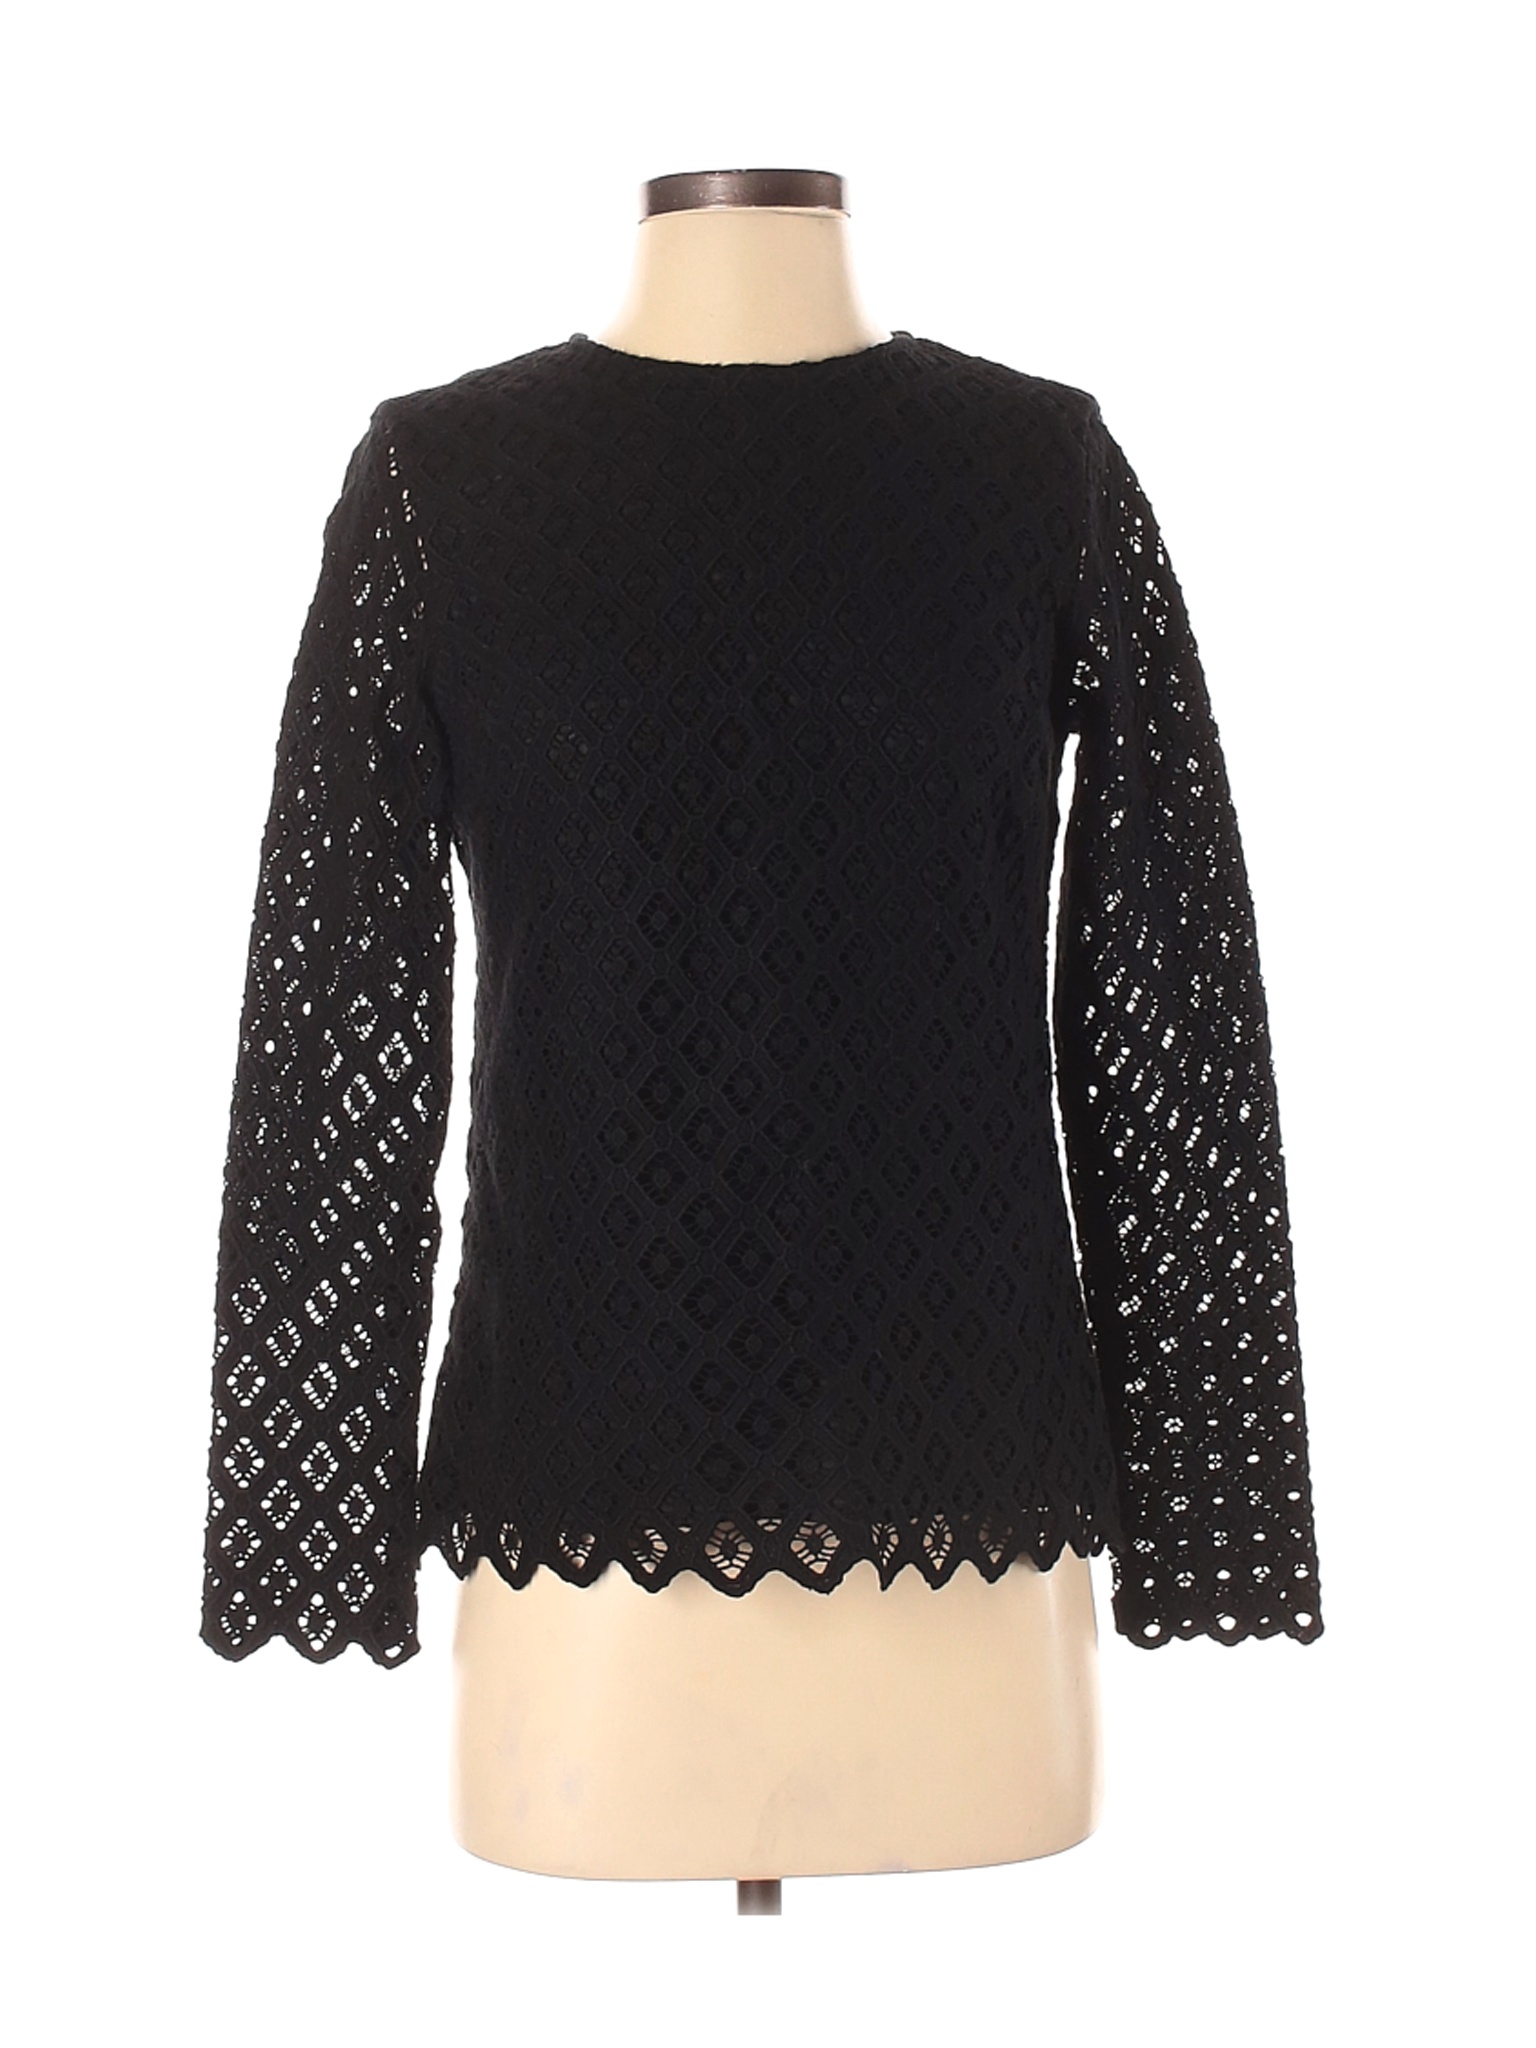 NWT J. McLaughlin Women Black Long Sleeve Blouse XS | eBay